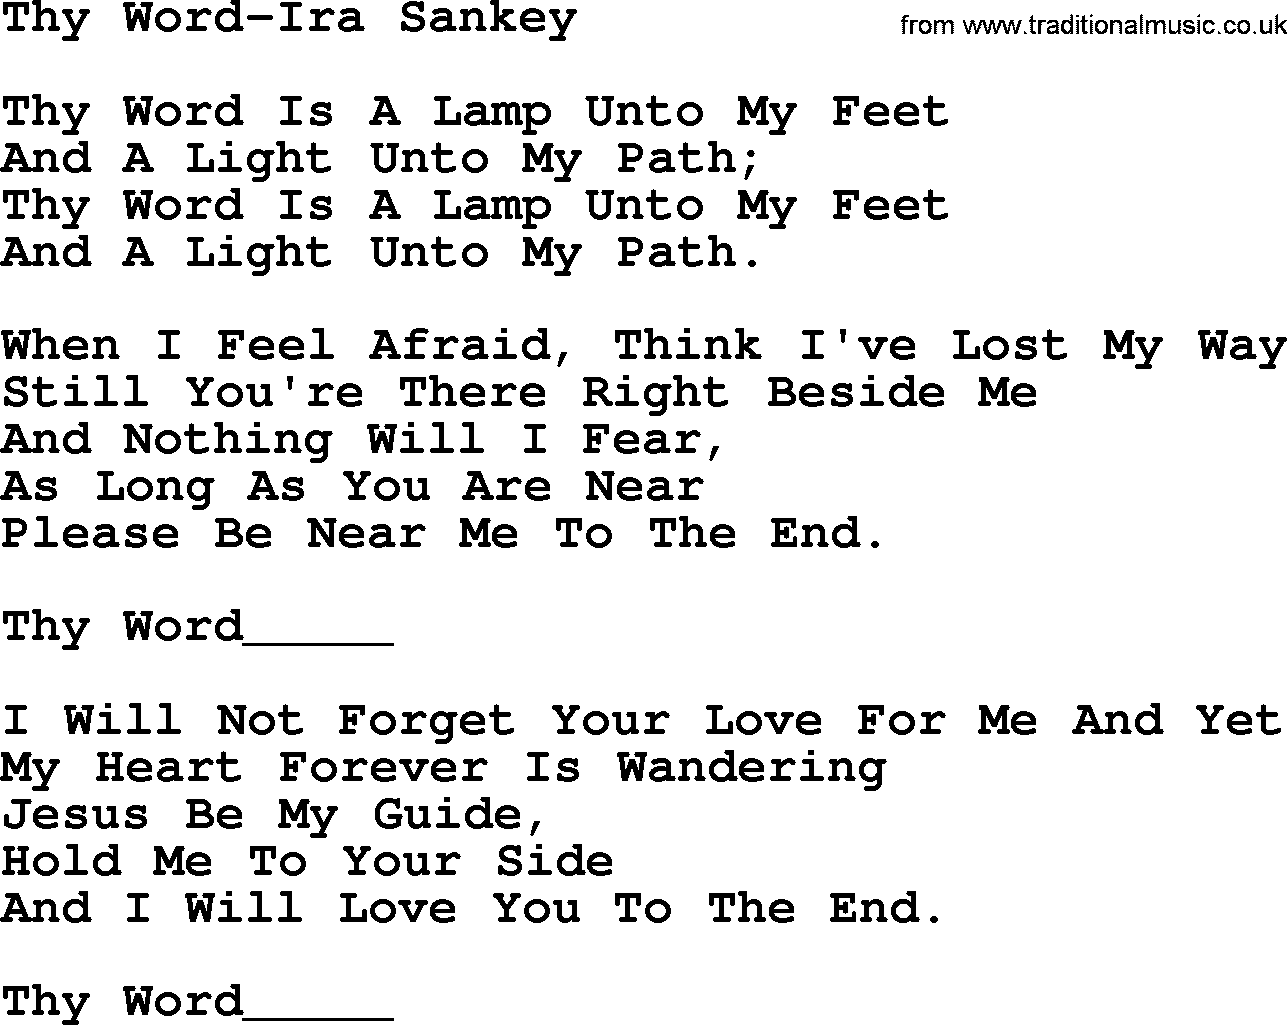 Ira Sankey hymn: Thy Word-Ira Sankey, lyrics